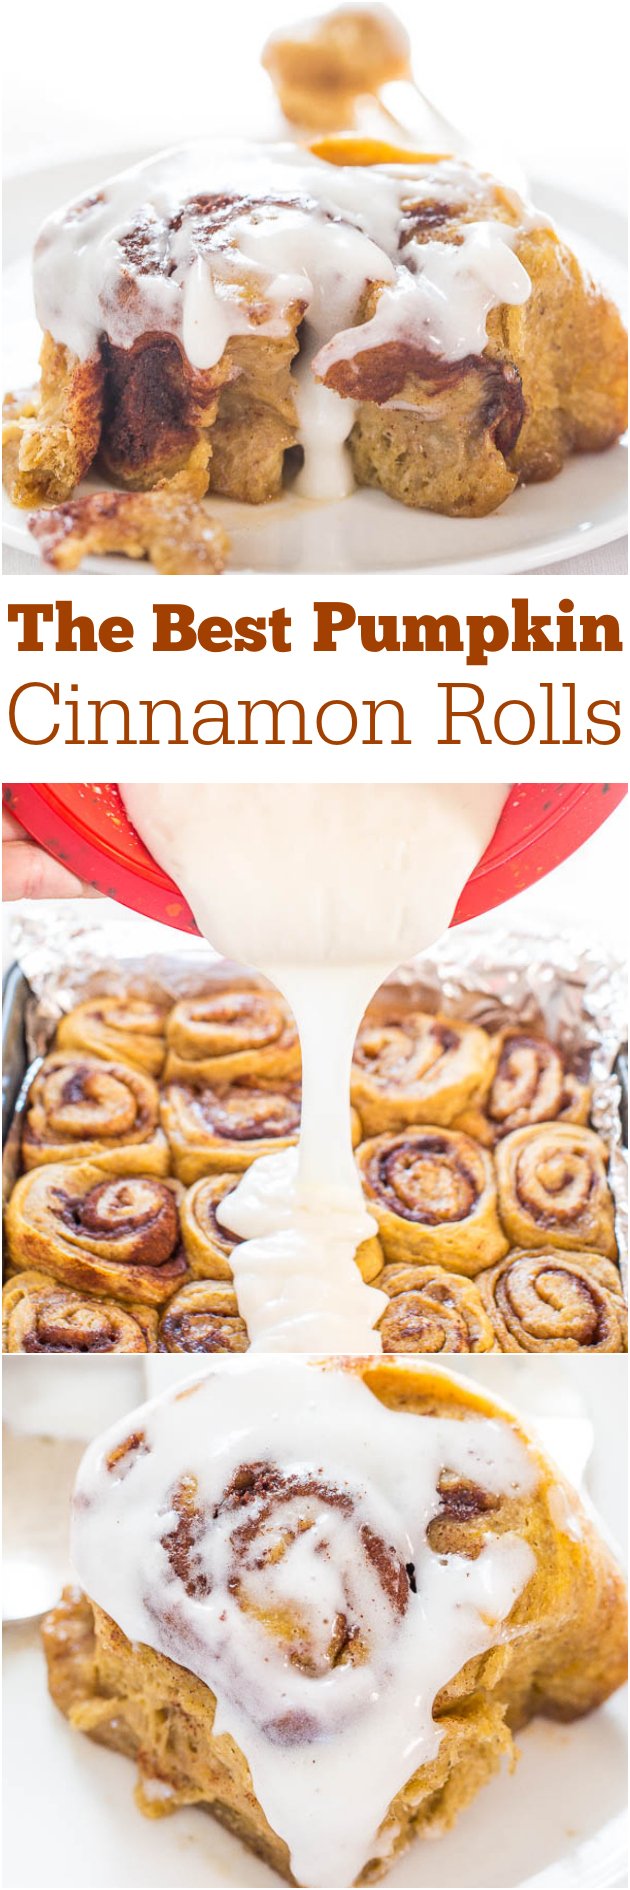 The Best Pumpkin Cinnamon Rolls — Super soft, fluffy pumpkin spice cinnamon rolls topped with a cream cheese glaze! Move over, Cinnabon, these are better!!